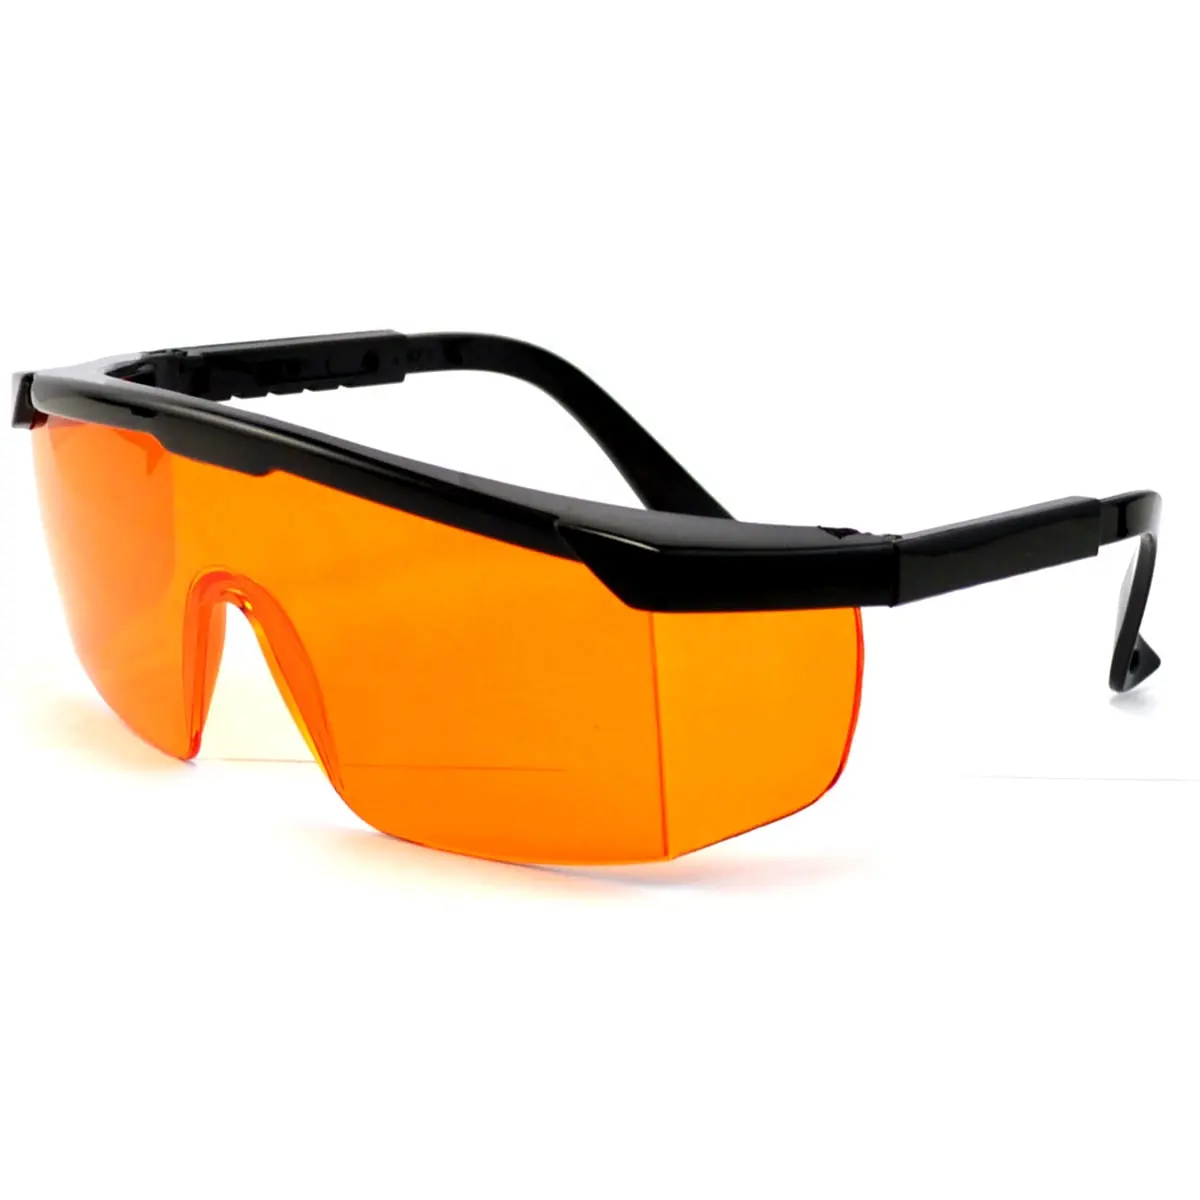 Professional UVC Protection Blue Light Blocking 190-540nm Laser Protective Eye Glasses EN207 ANSI Z 87.1 Approval